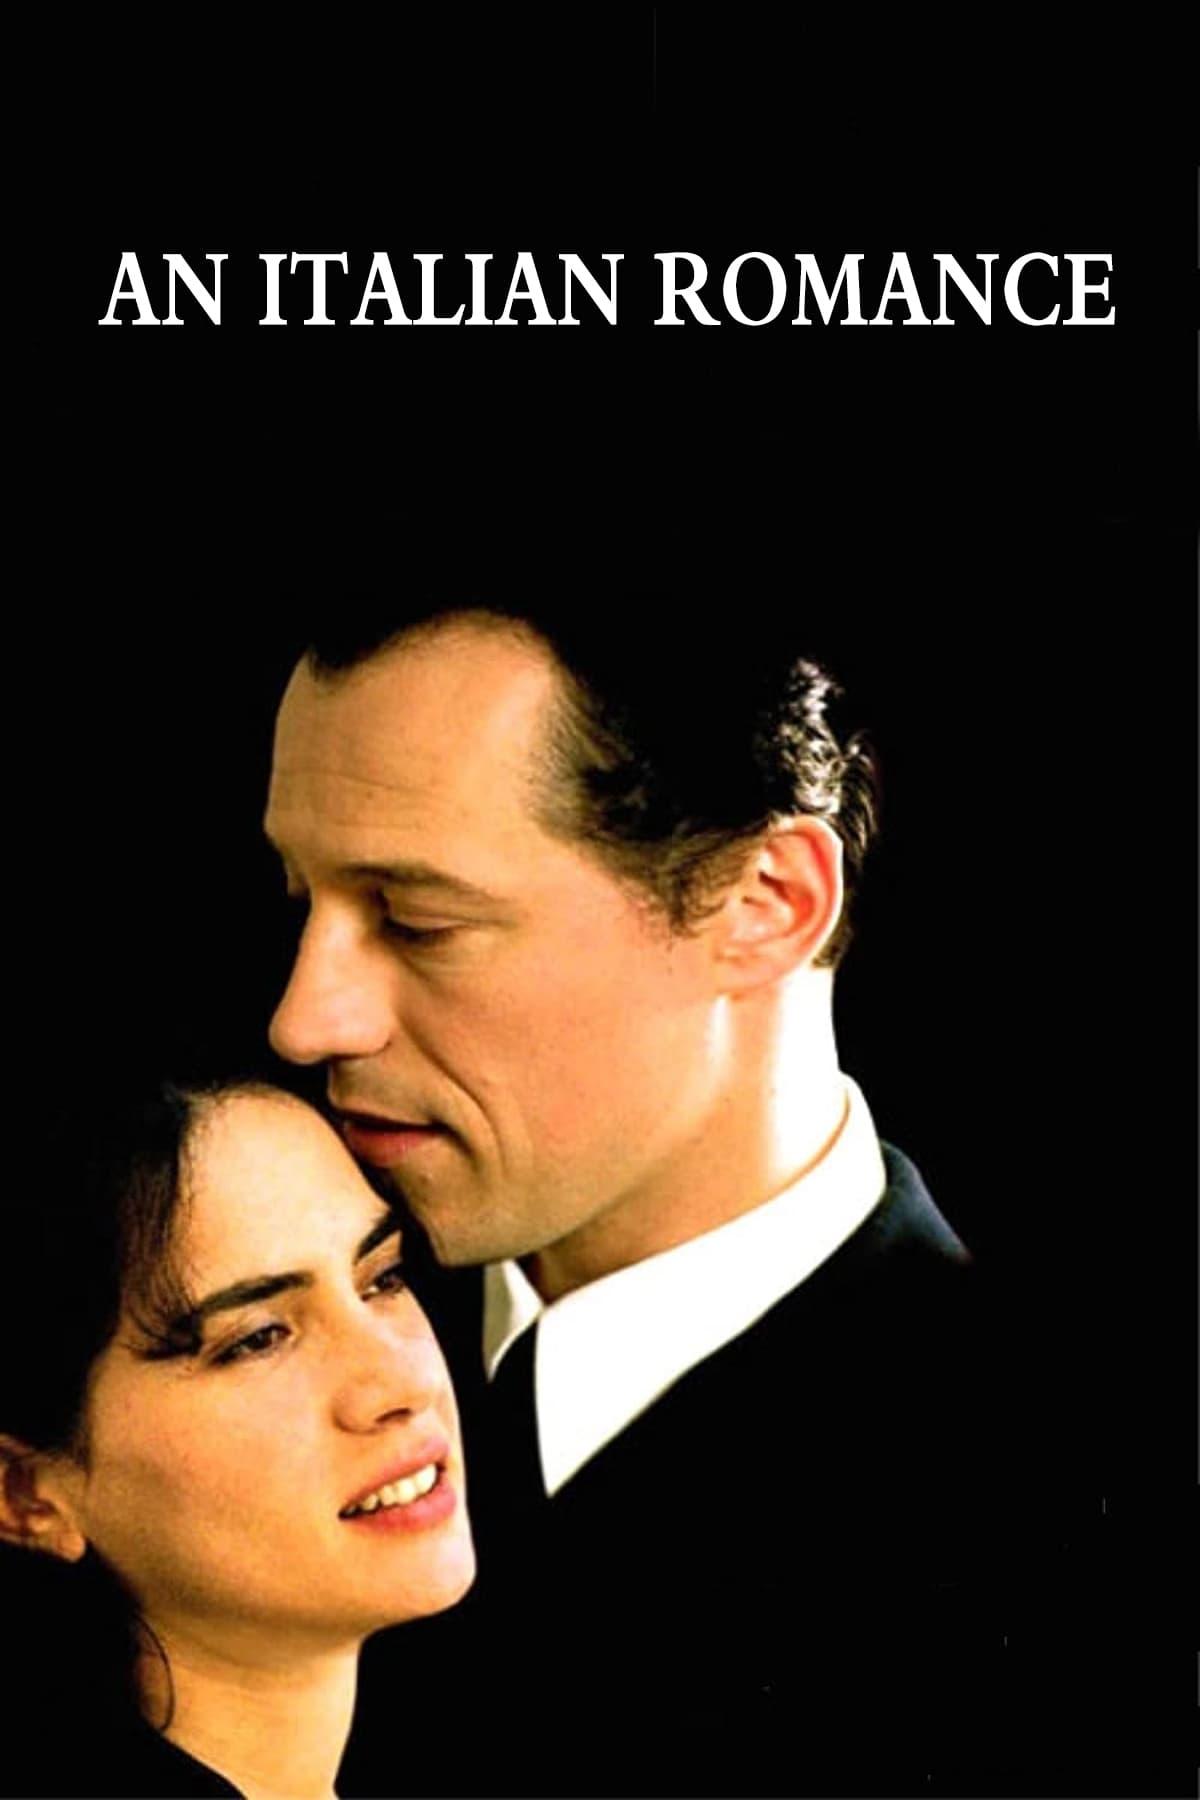 An Italian Romance poster